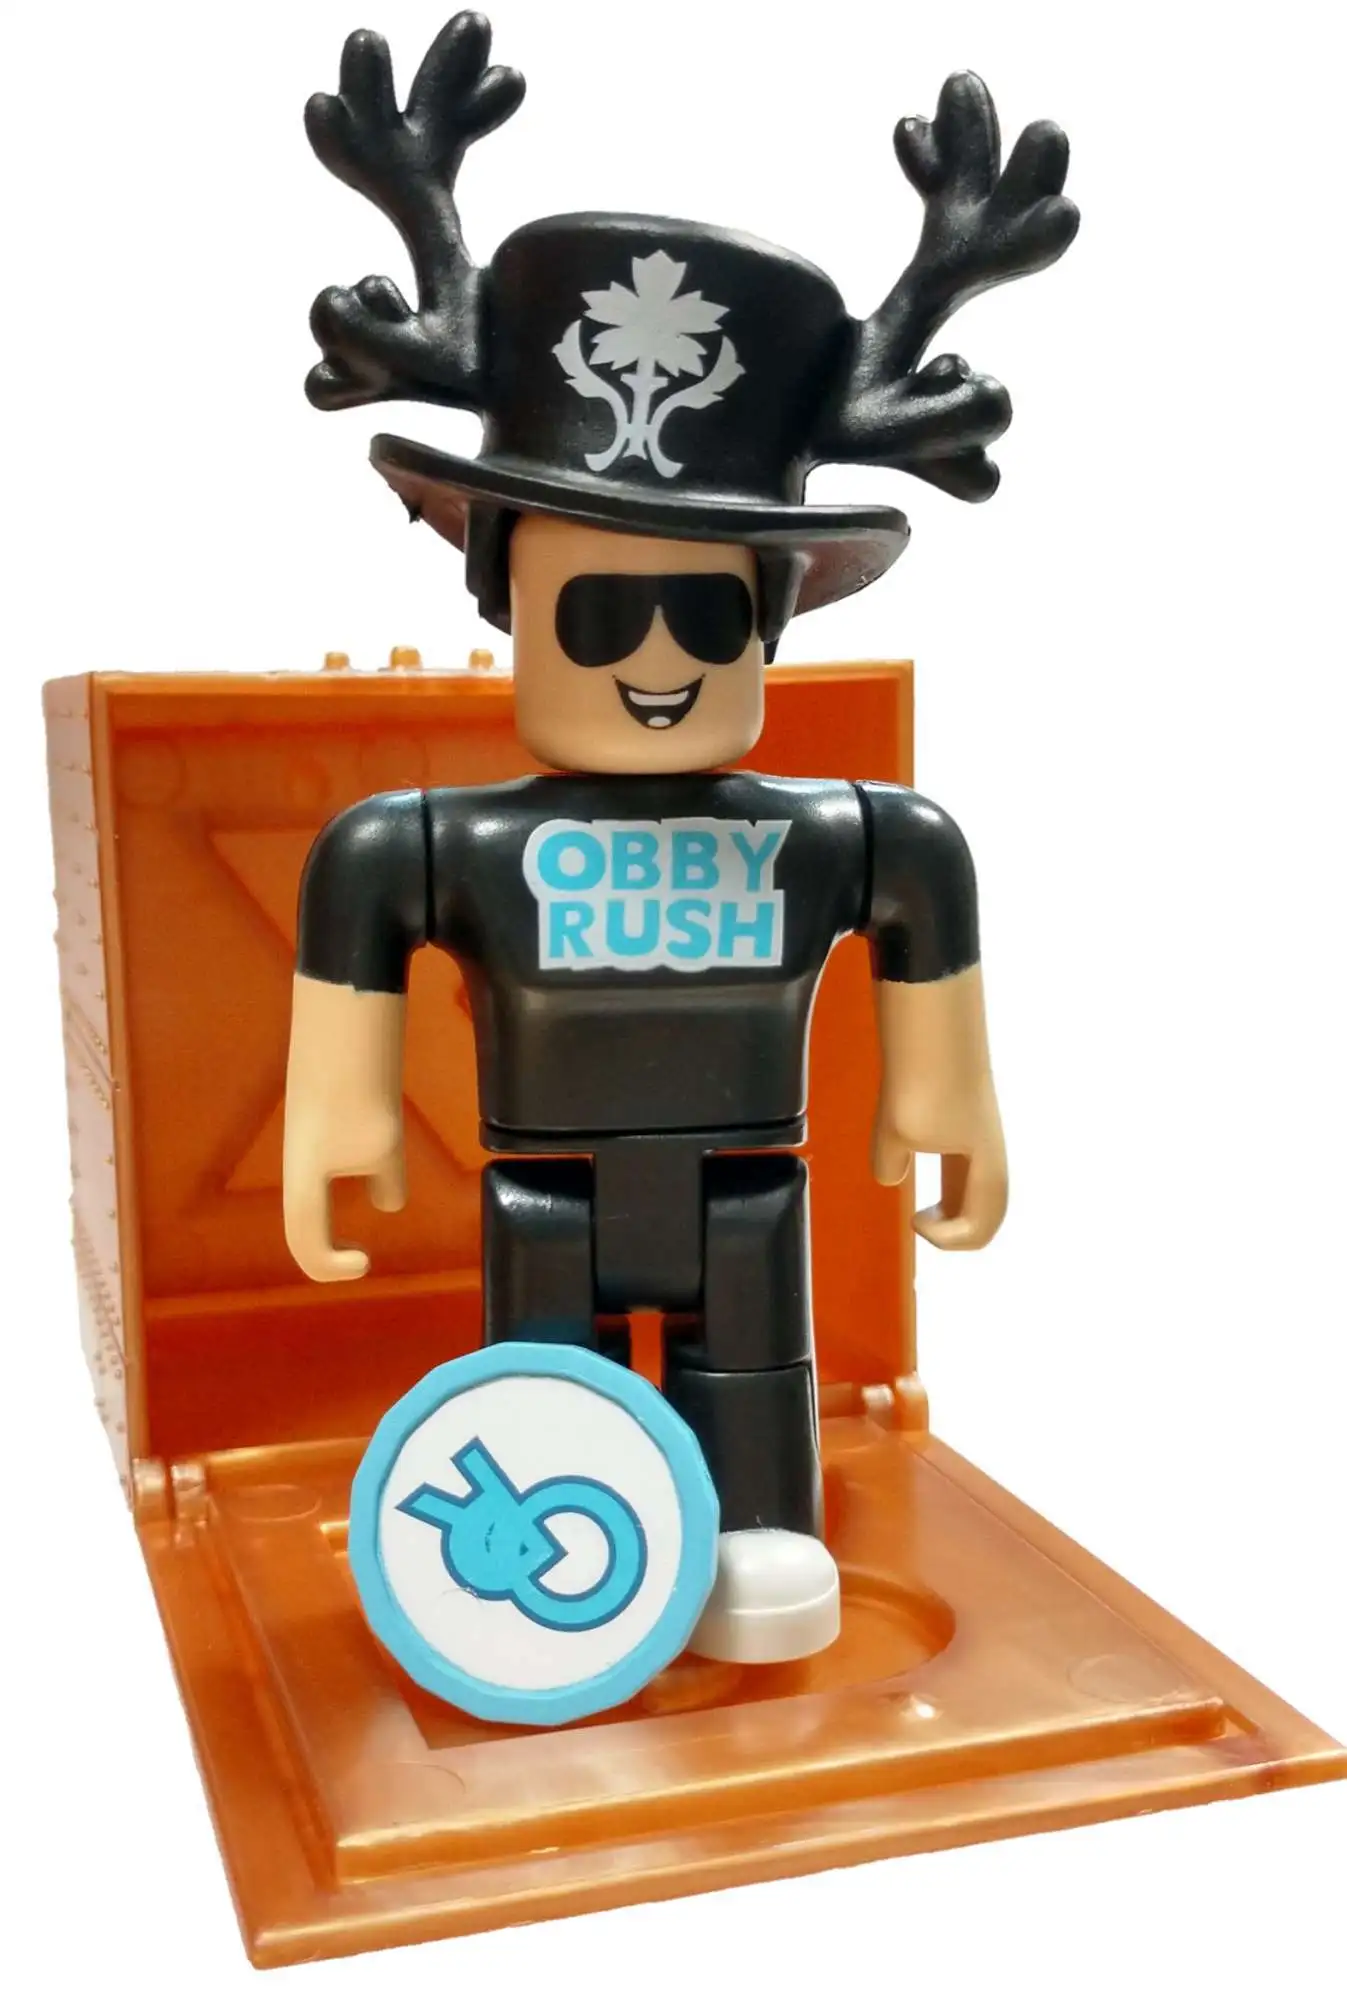 Lego Obby - Roblox